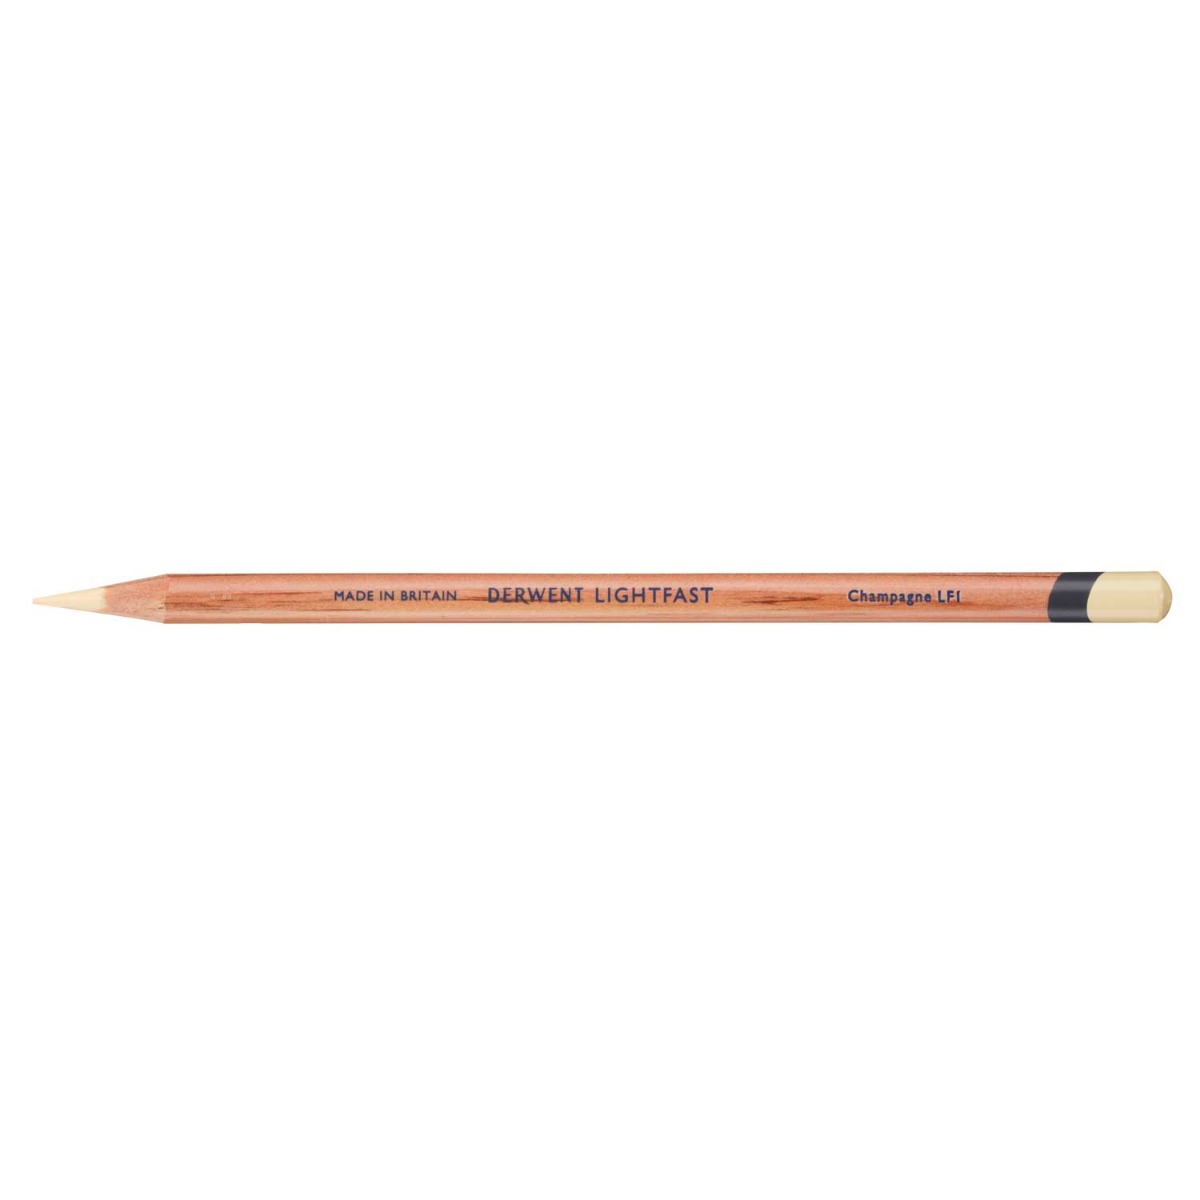 Derwent Lightfast Pencil Colour: Champagne